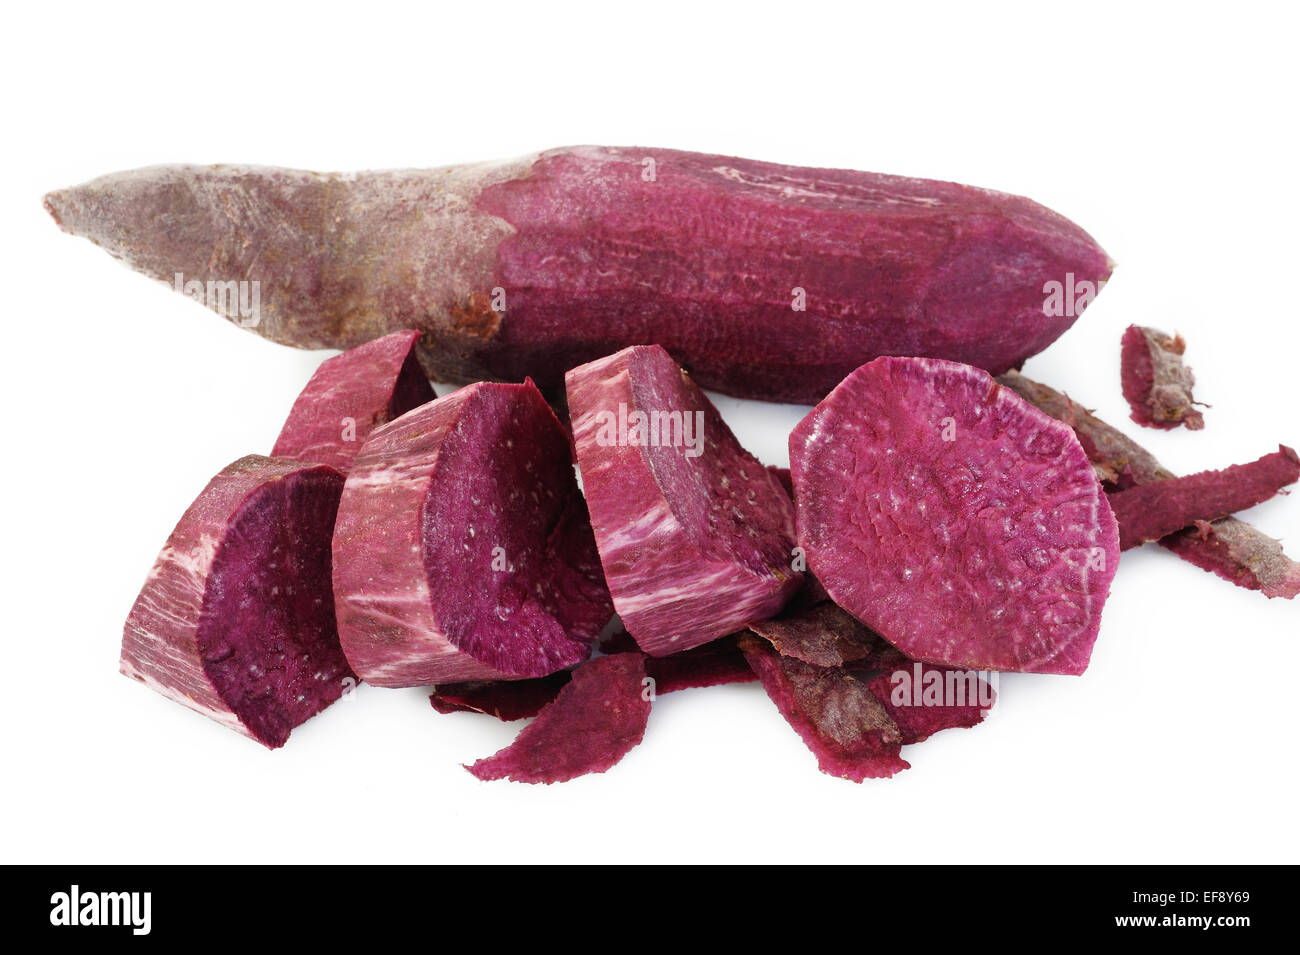 Purple sweet potatoes on white background Stock Photo